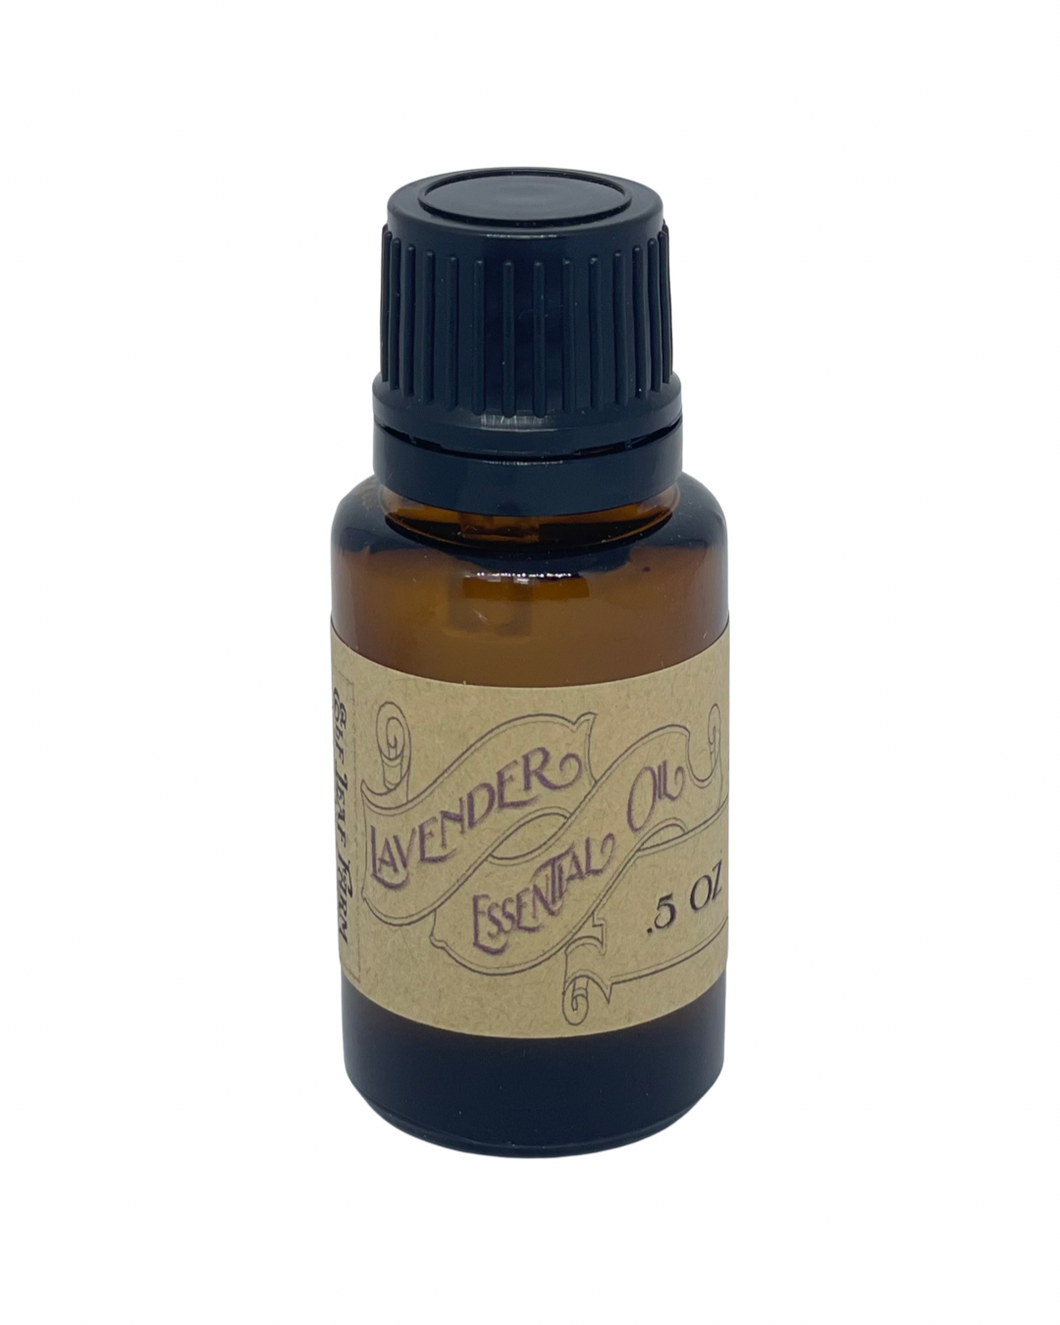 Lavender Essential Oil .5 oz